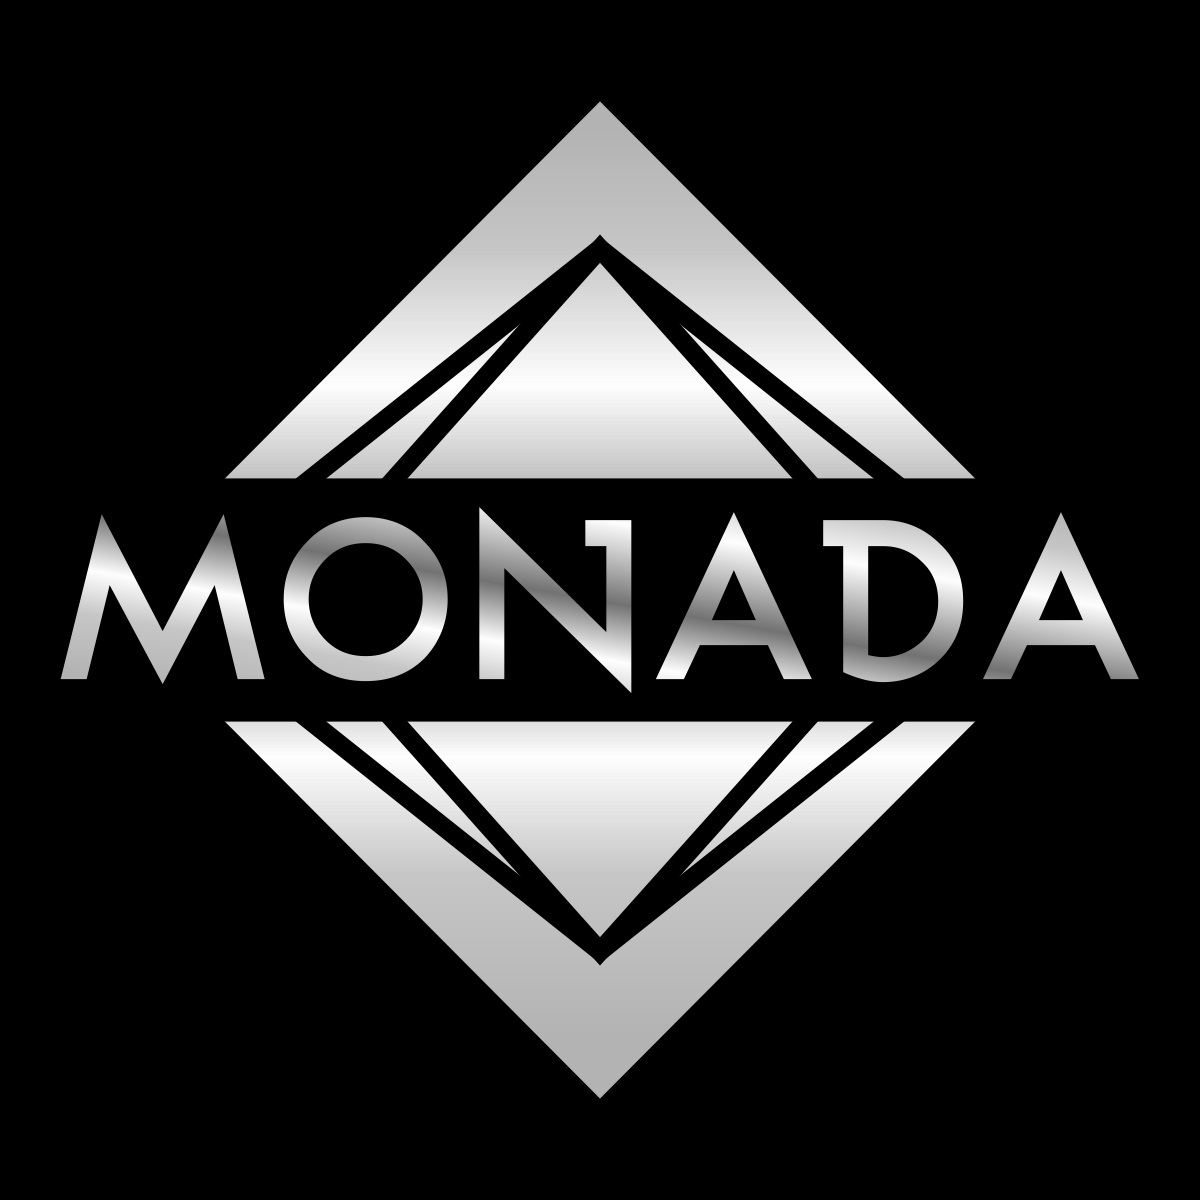 MONADA-MEBLE ADAM TARAN logo